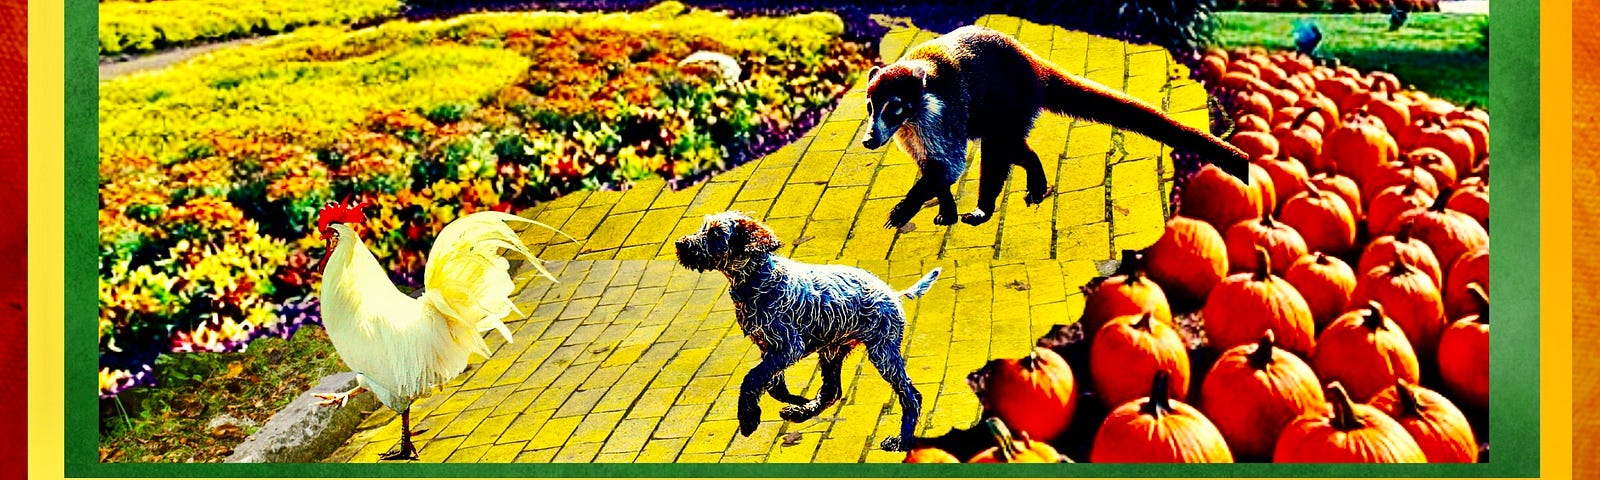 Three animal friends walk down a yellow brick road in a beautiful fall garden